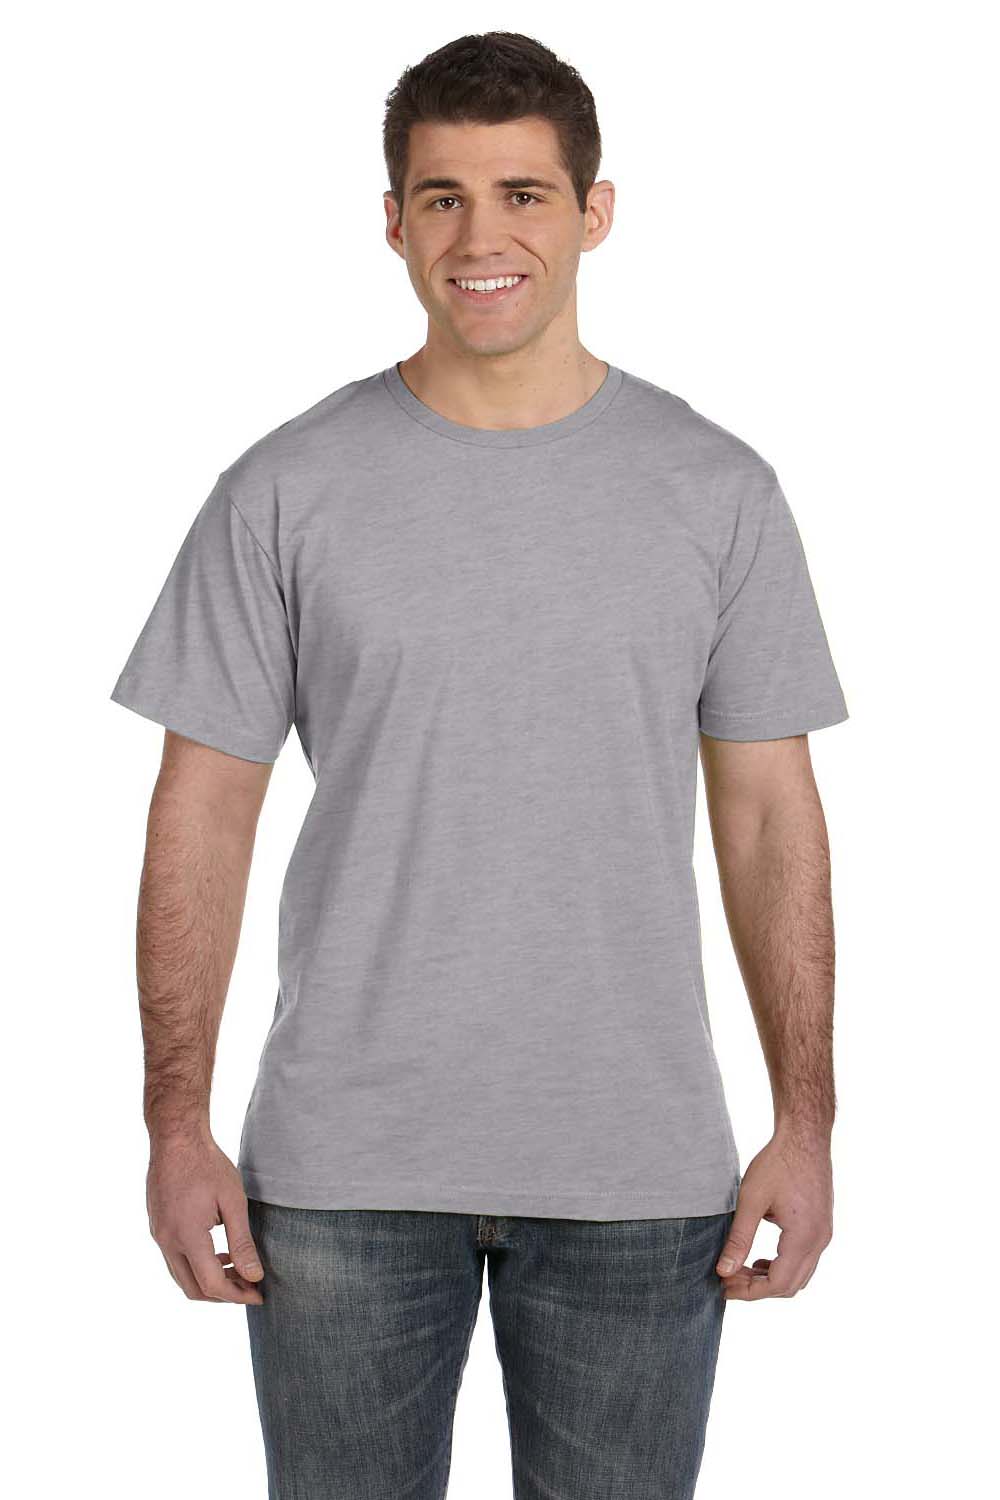 LAT 6901 Mens Fine Jersey Short Sleeve Crewneck T-Shirt Heather Grey Front